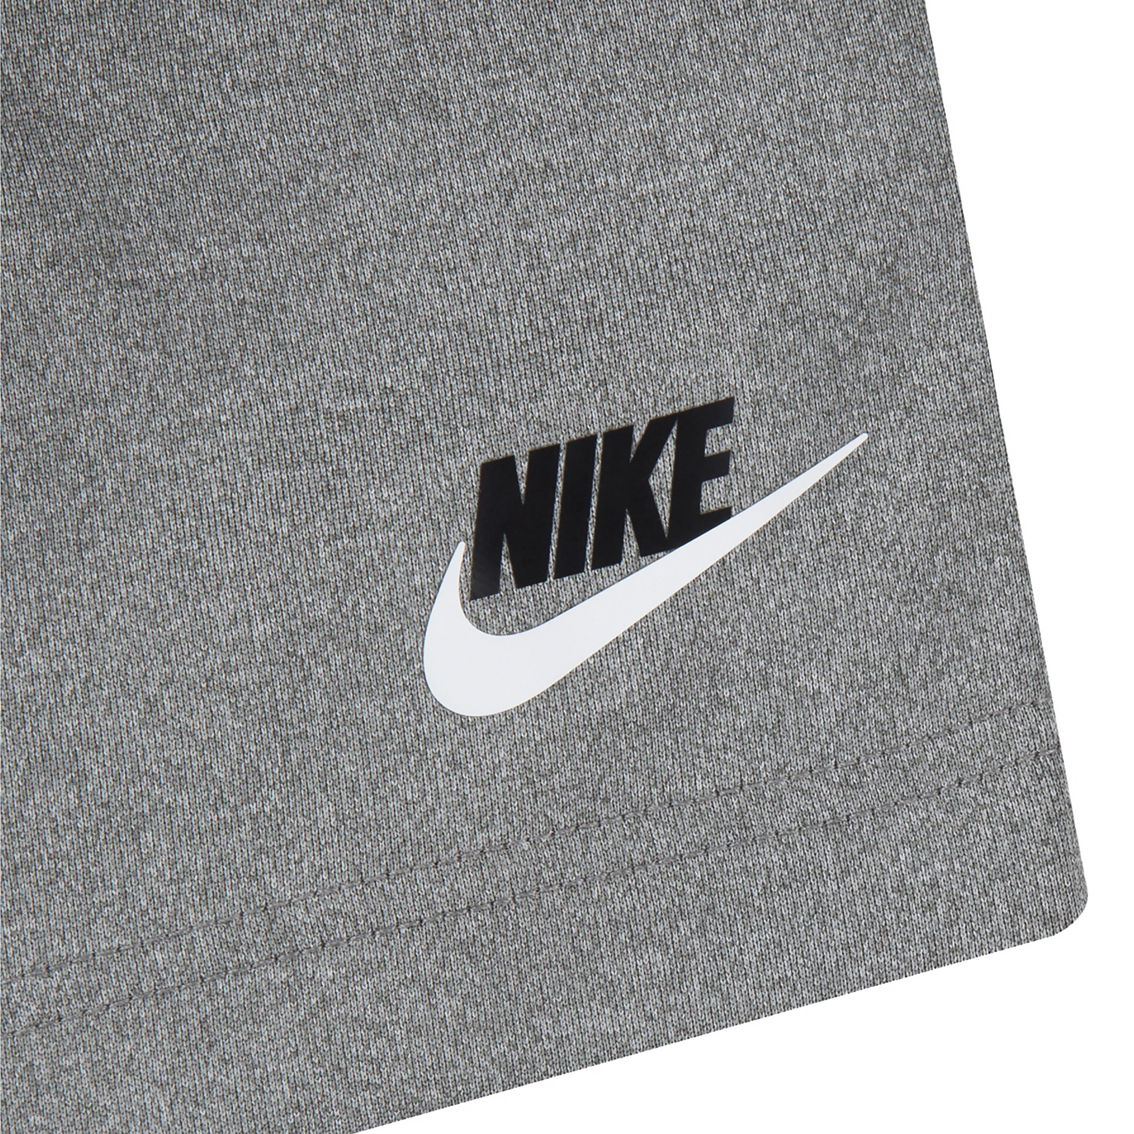 Nike Toddler Boys Sportswear Split Futura Tee and Shorts 2 pc. Set - Image 5 of 5